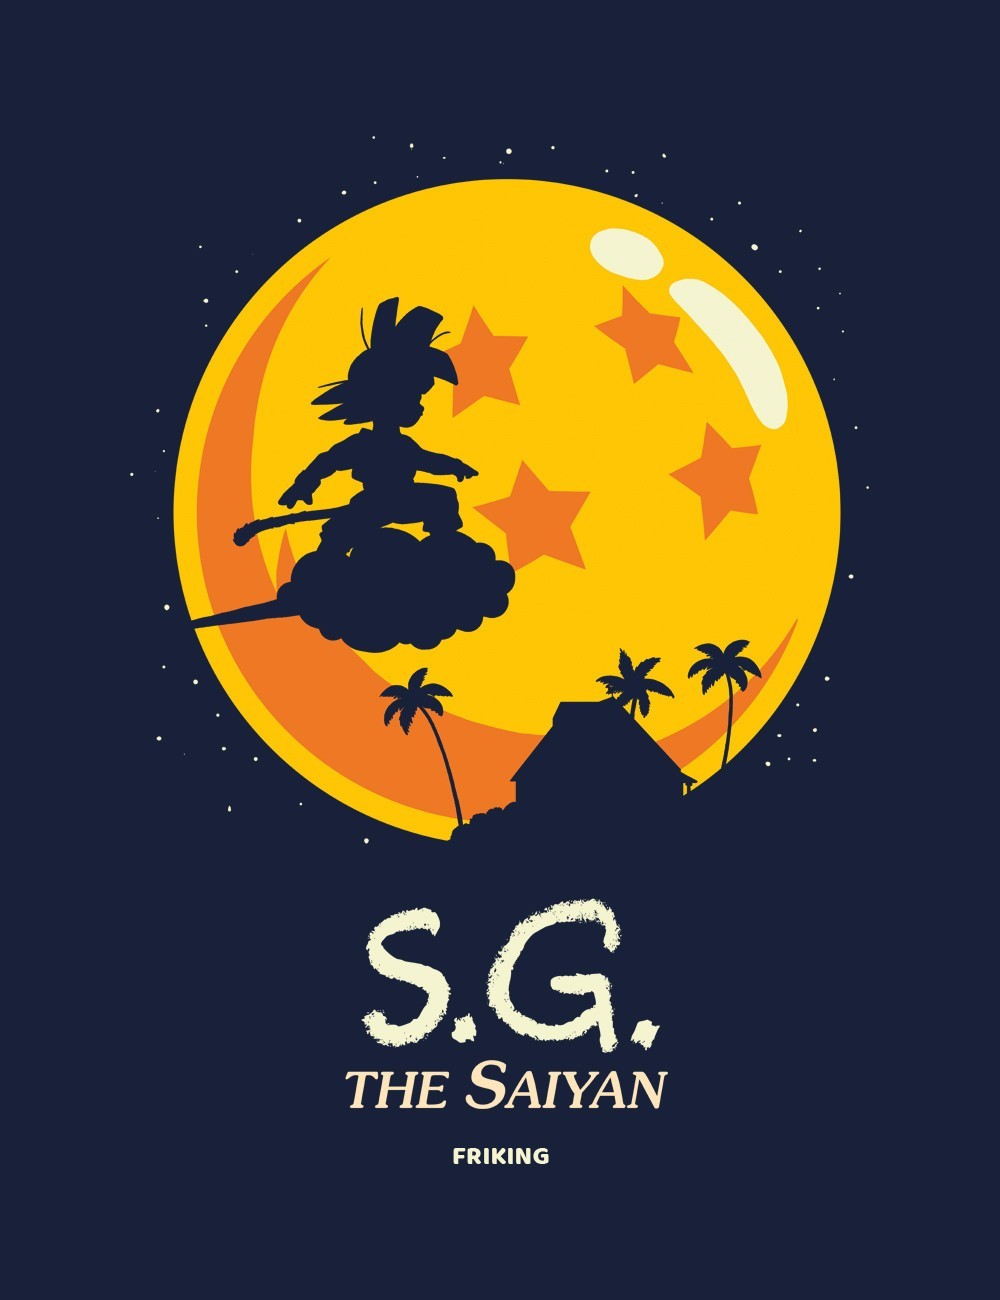  S.G. the saiyan 